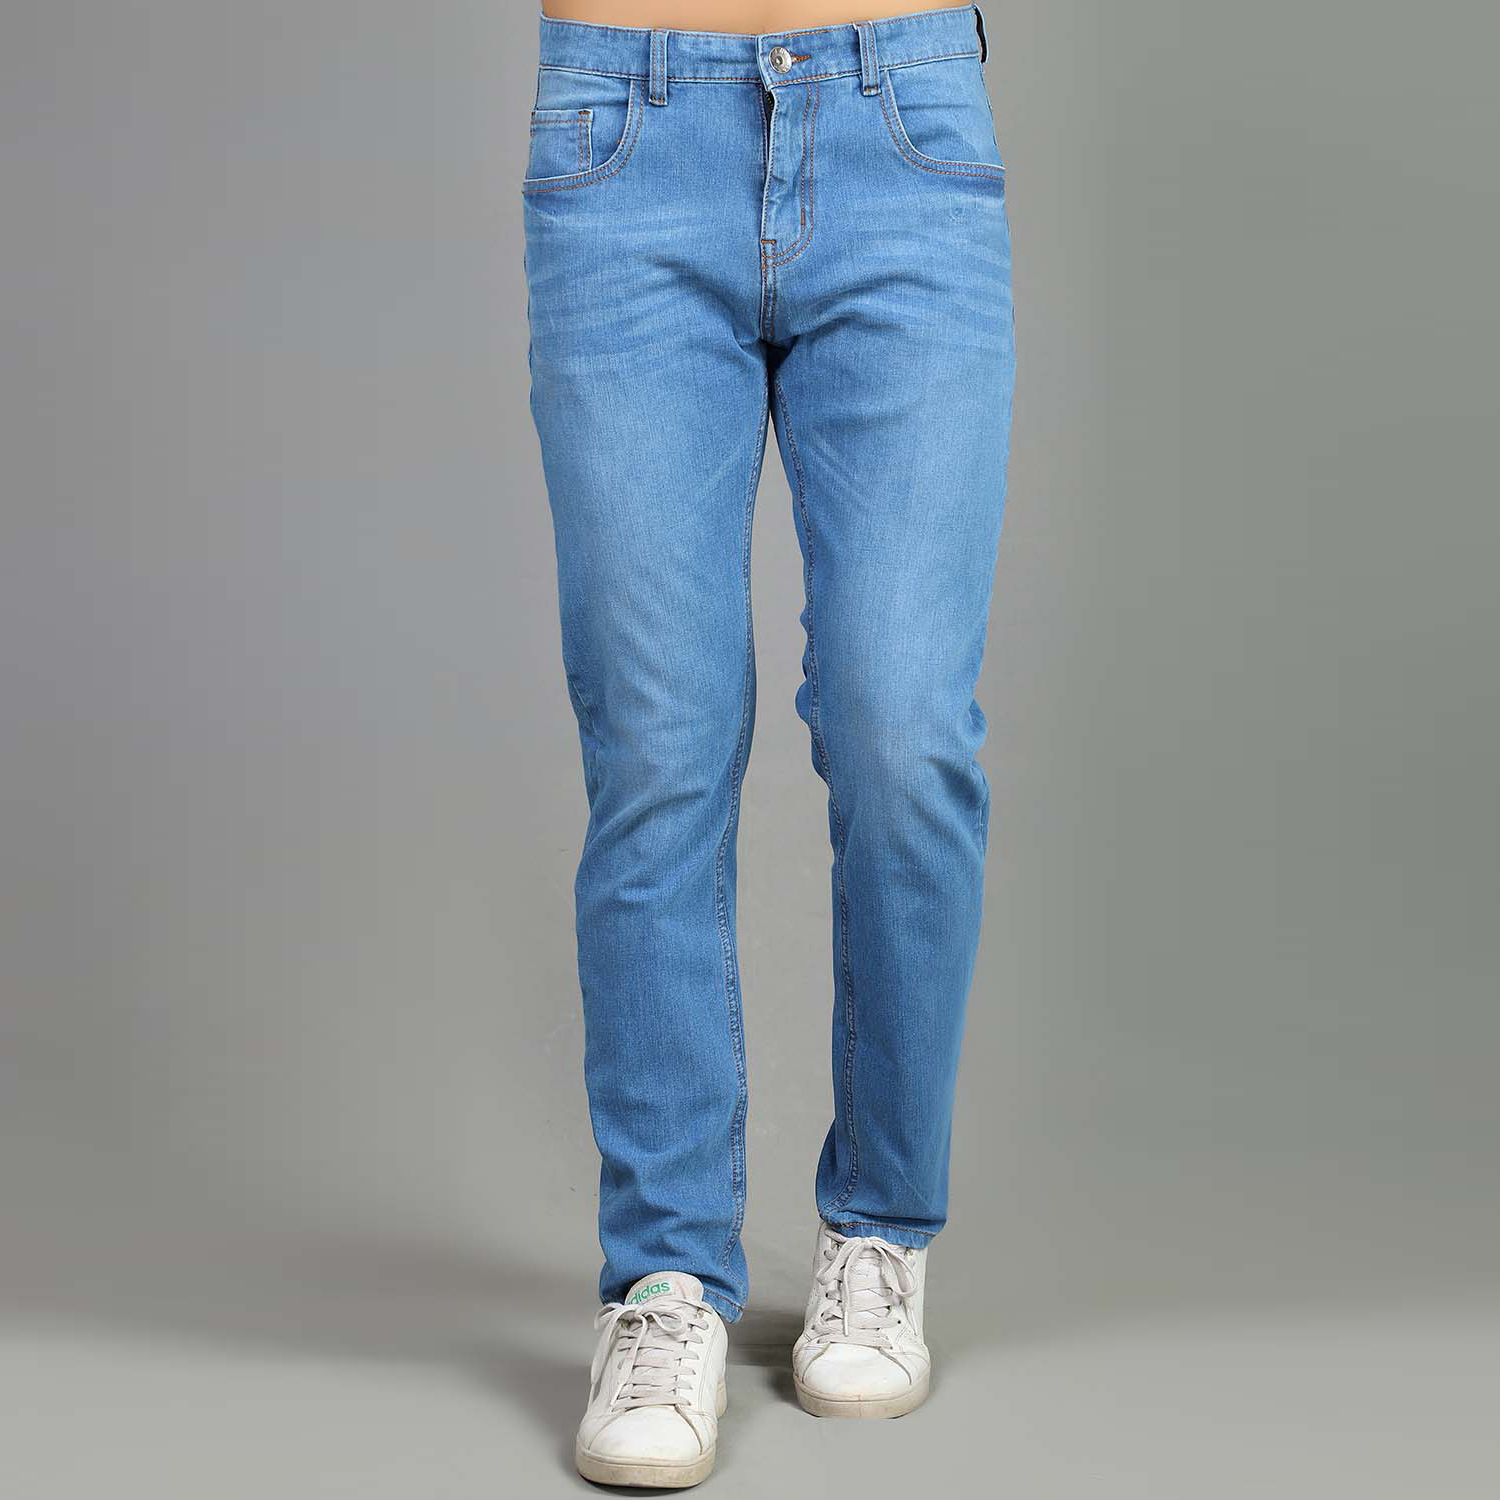 NZ-13004 Slim-fit Stretchable Denim Jeans Pant For Men - Light Blue ...